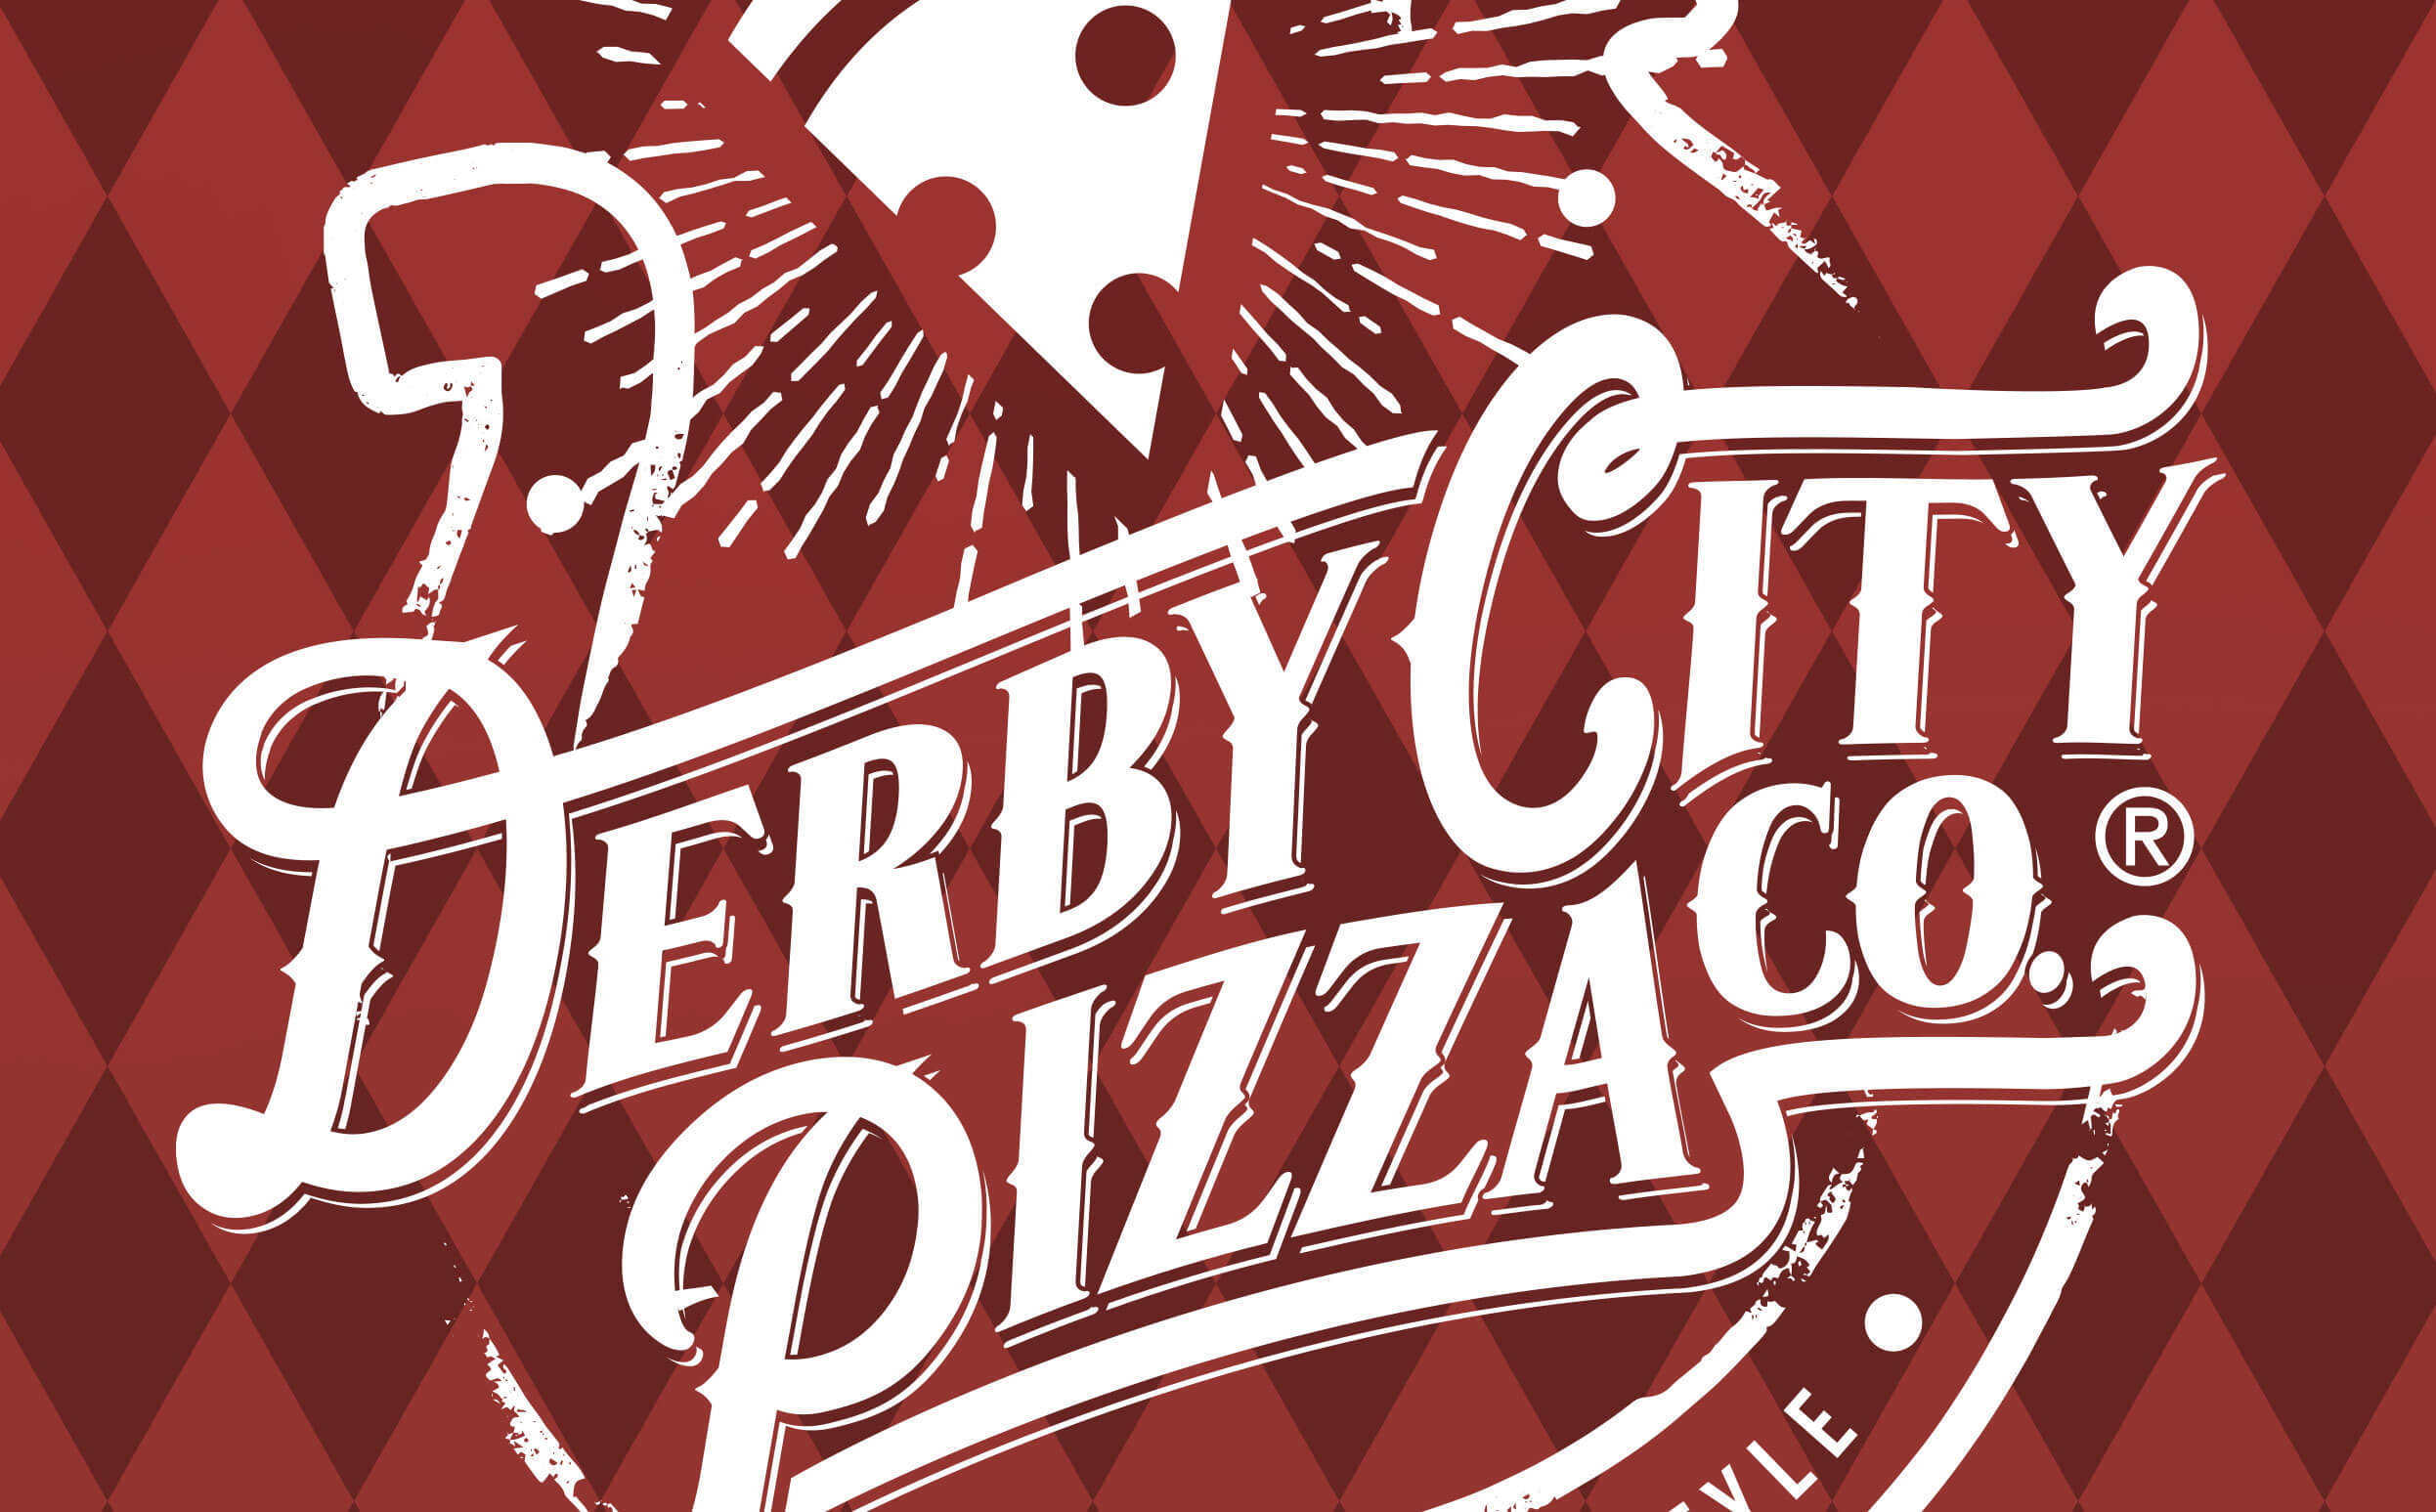 Derby City Pizza Co. LopezBonilla Resources